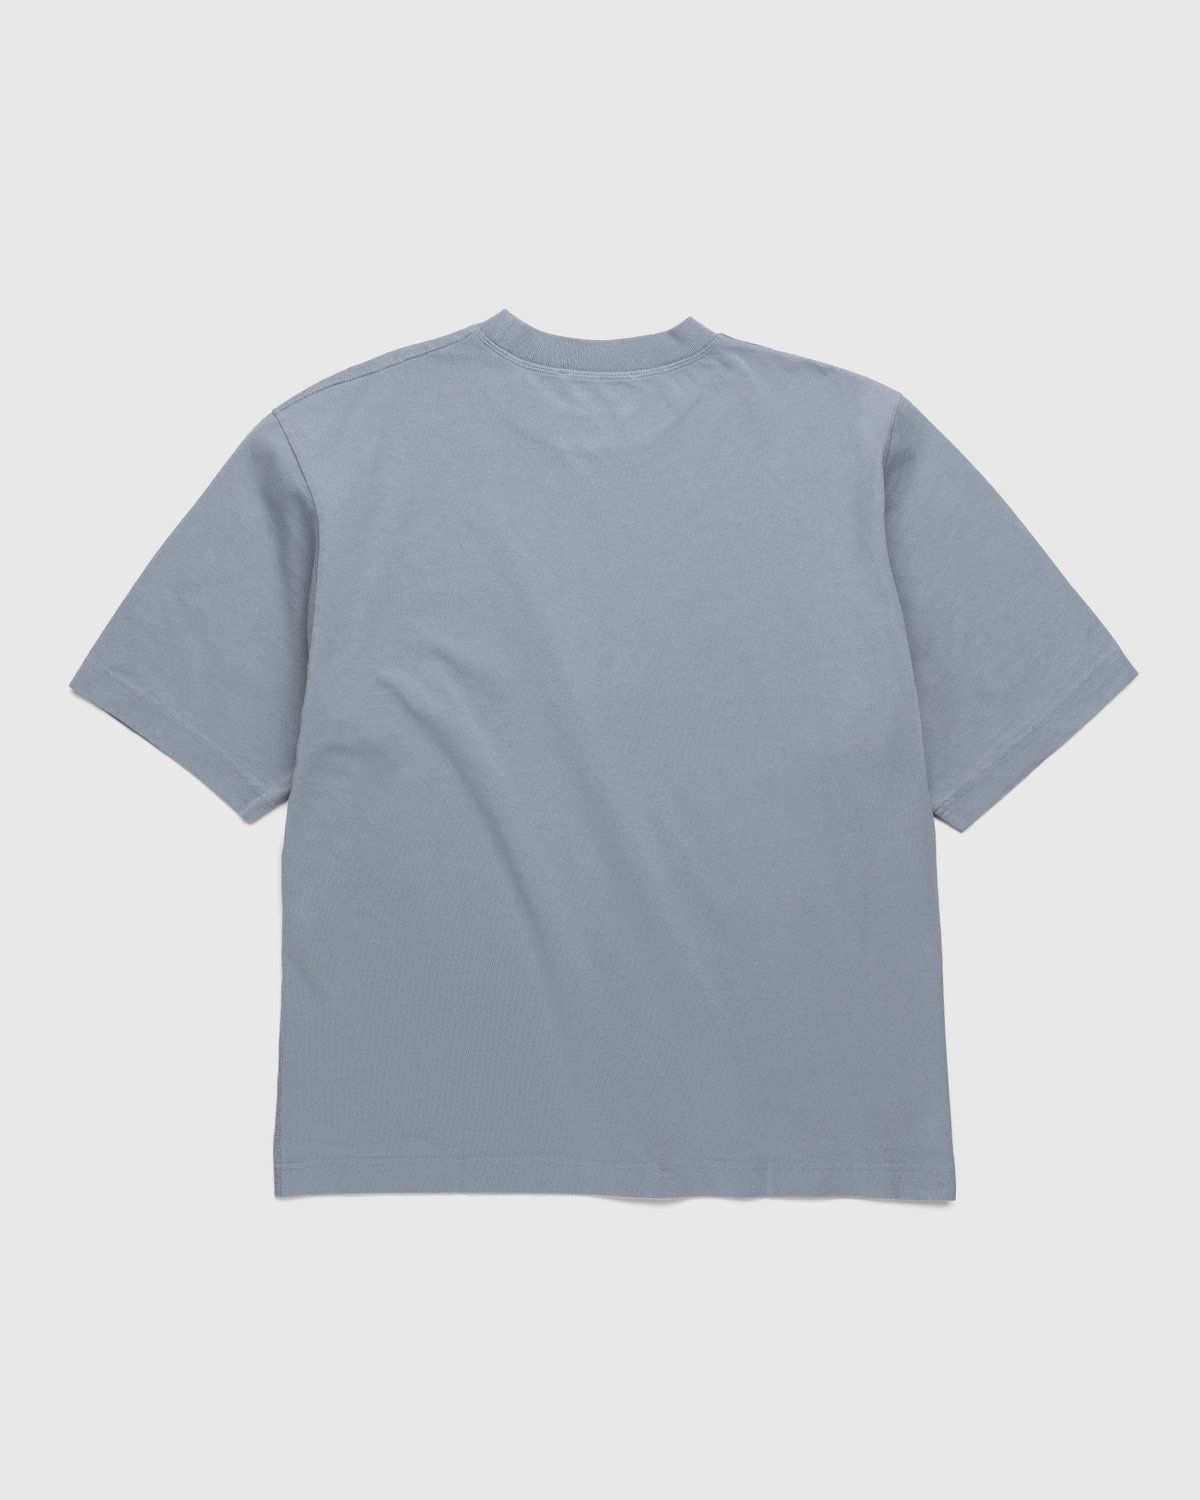 Acne Studios – Logo T-Shirt Steel Grey - Image 2